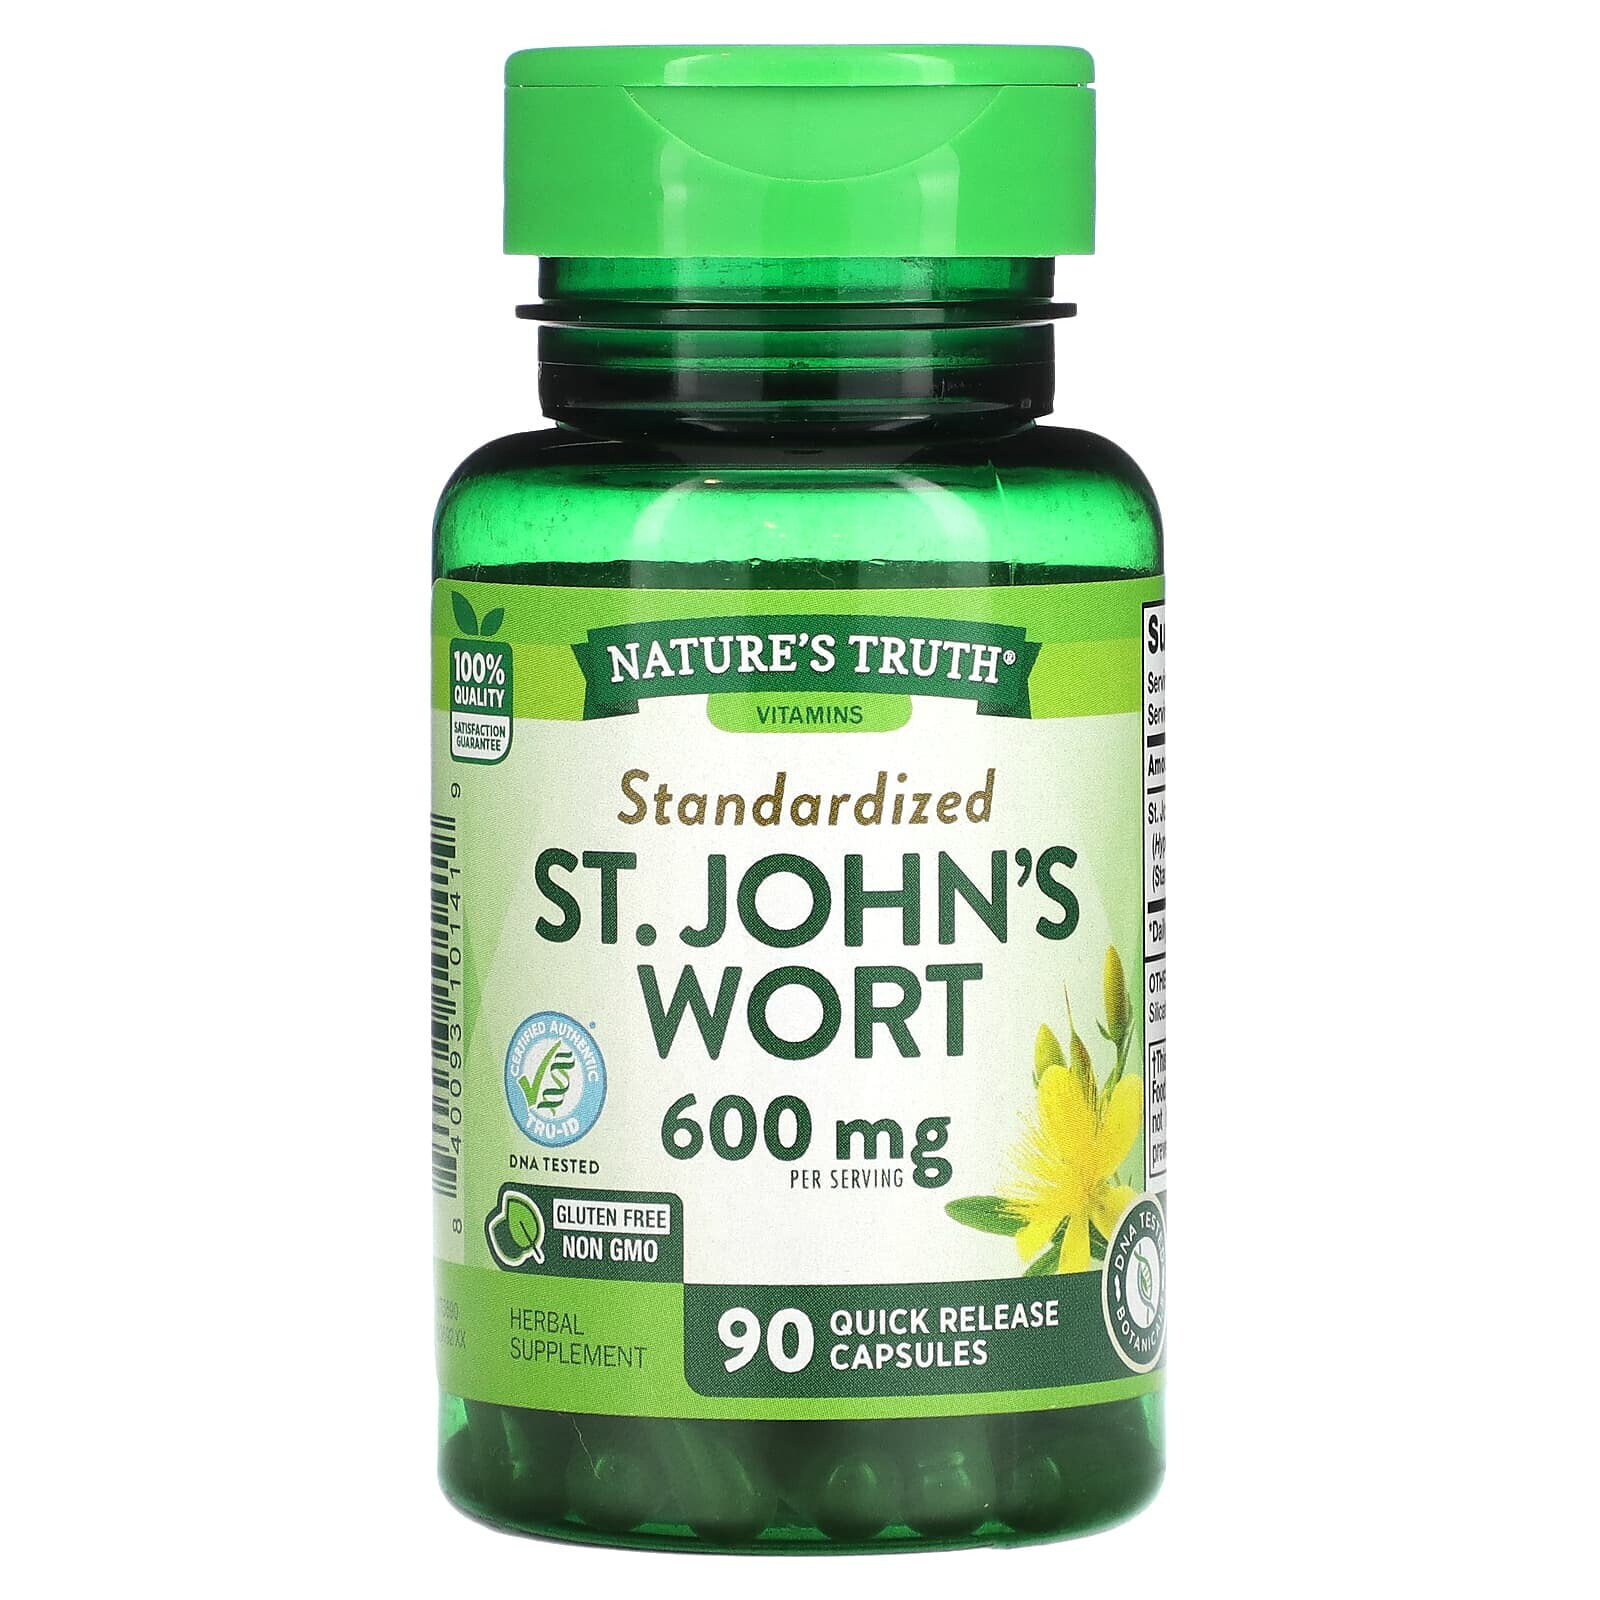 Standardized St. John's Wort, 600 mg, 90 Quick Release Capsules (300 mg per Capsule)